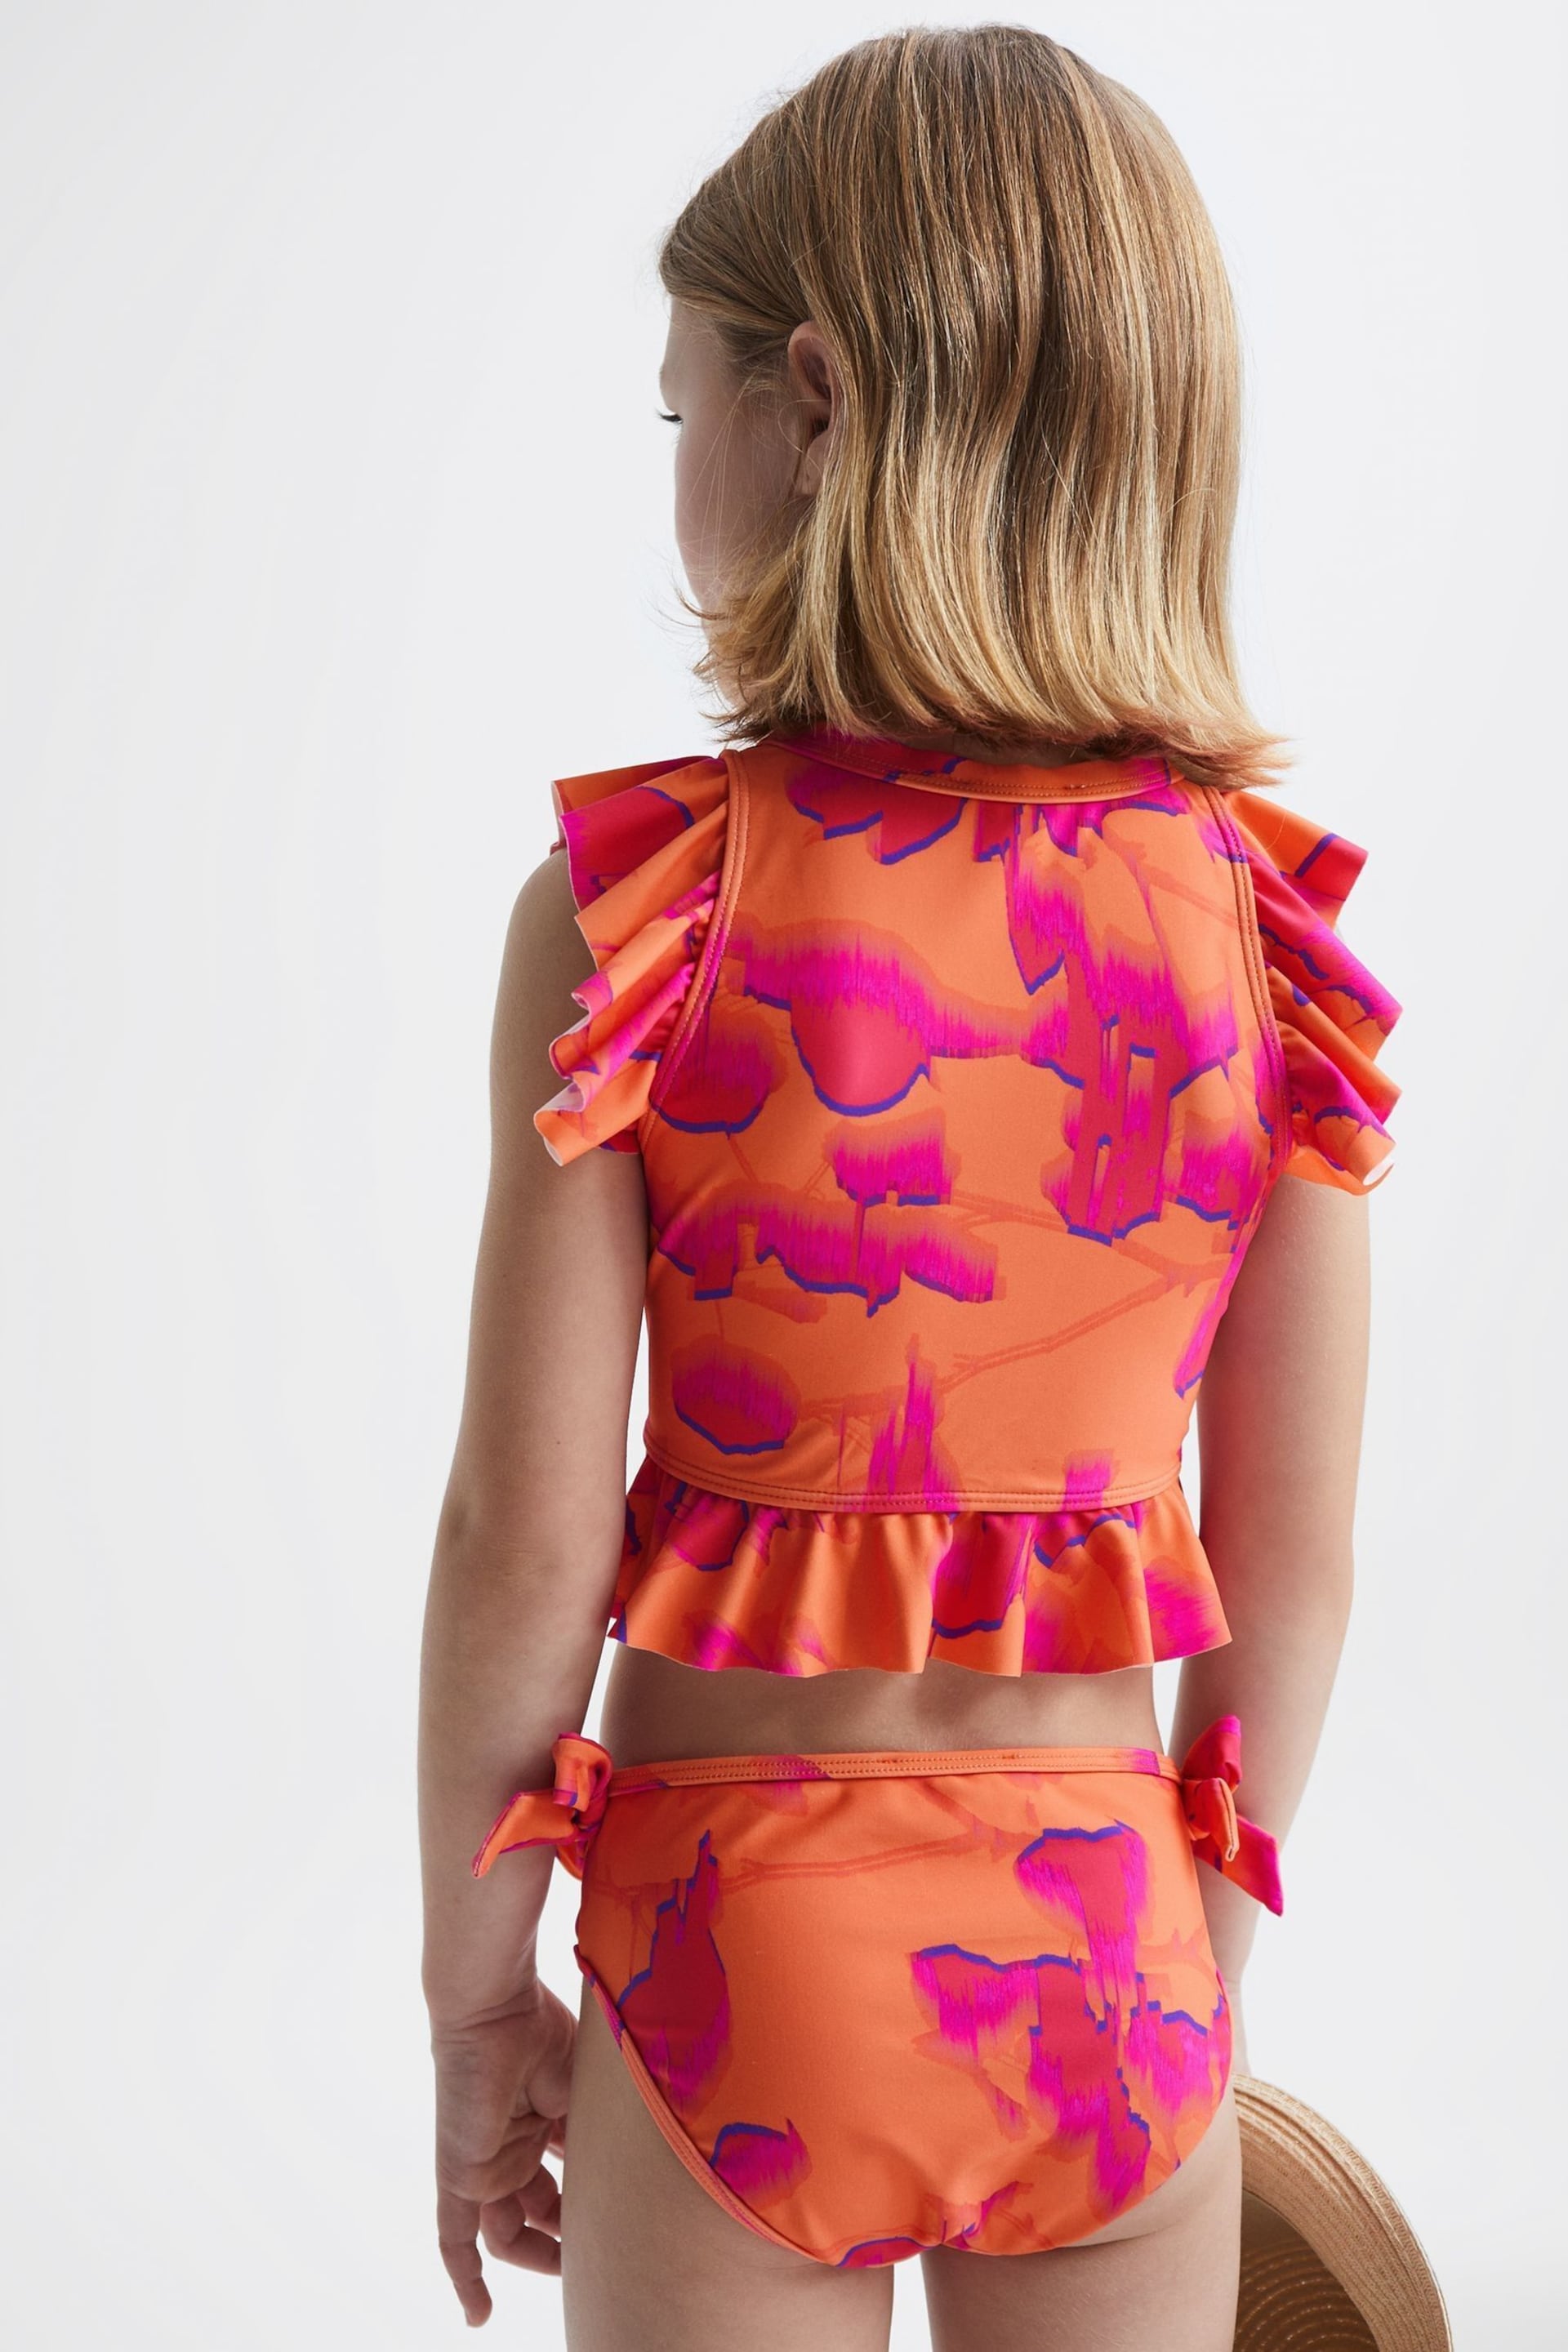 Reiss Orange Print Lilly Senior Floral Bikini Set - Image 4 of 5